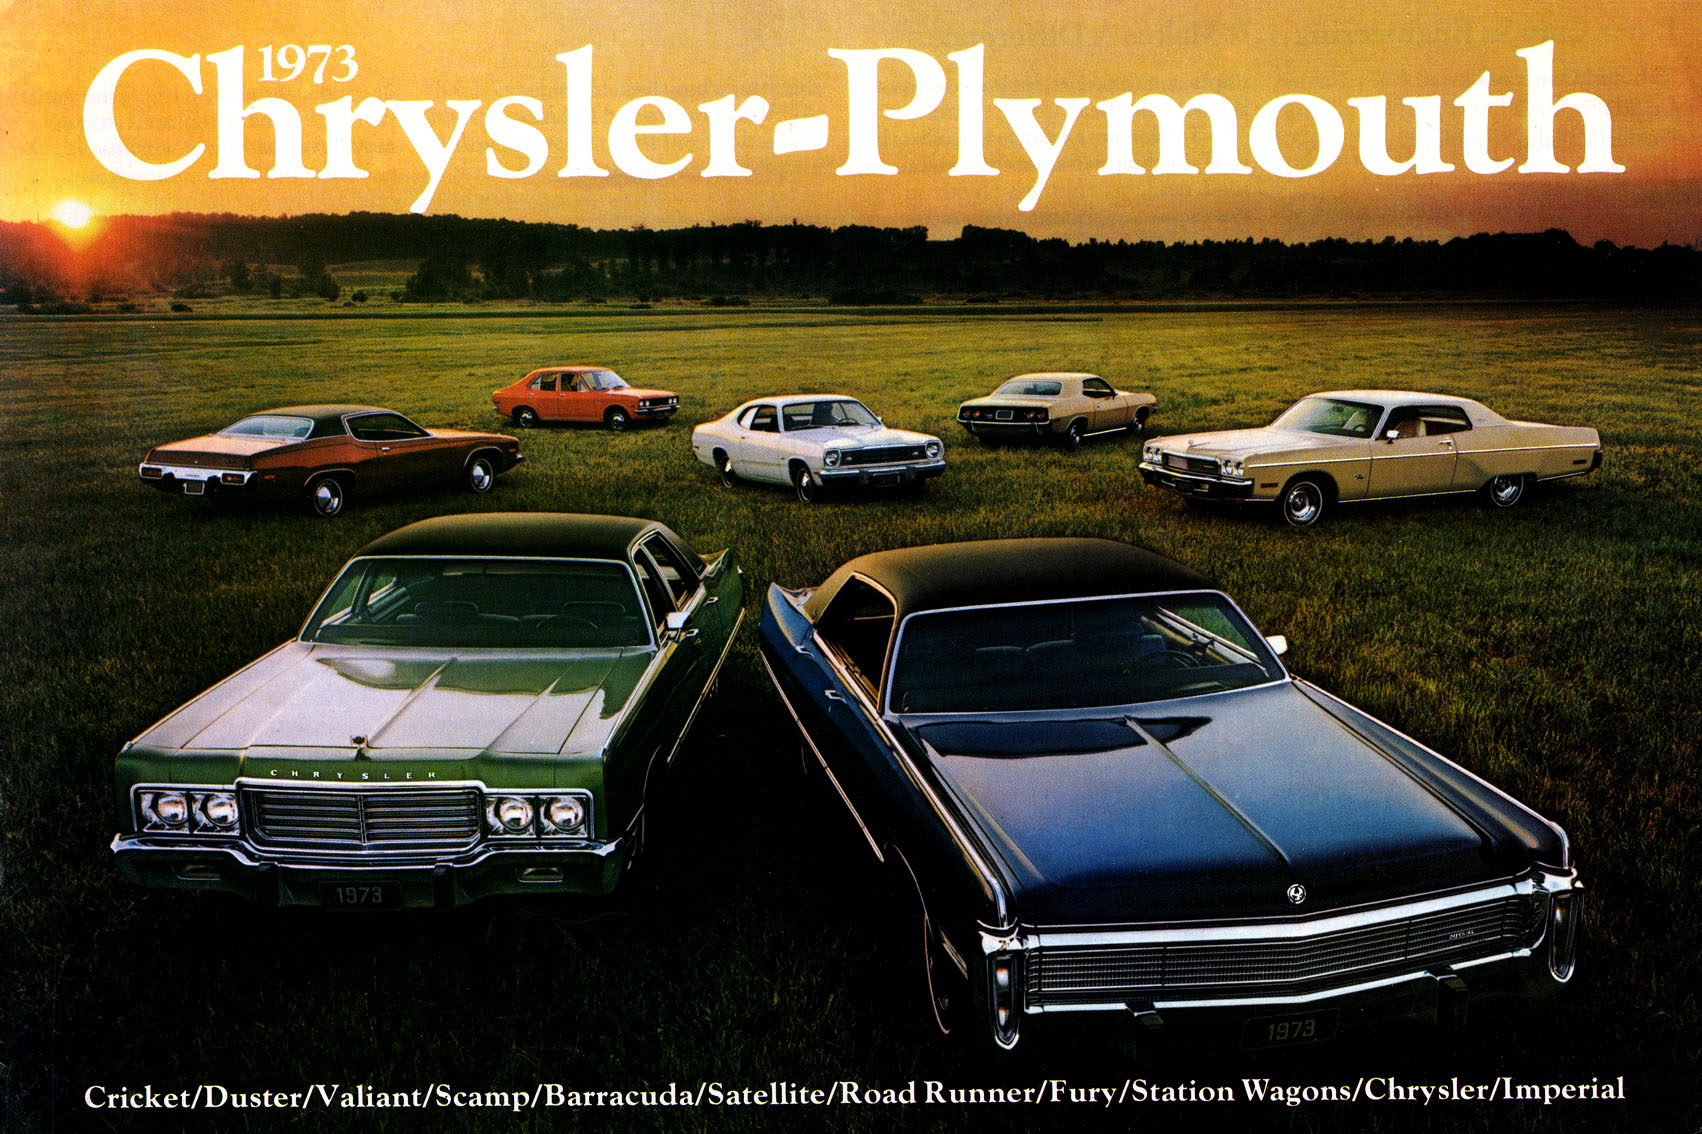 1973 Chrysler Plymouth Brochure